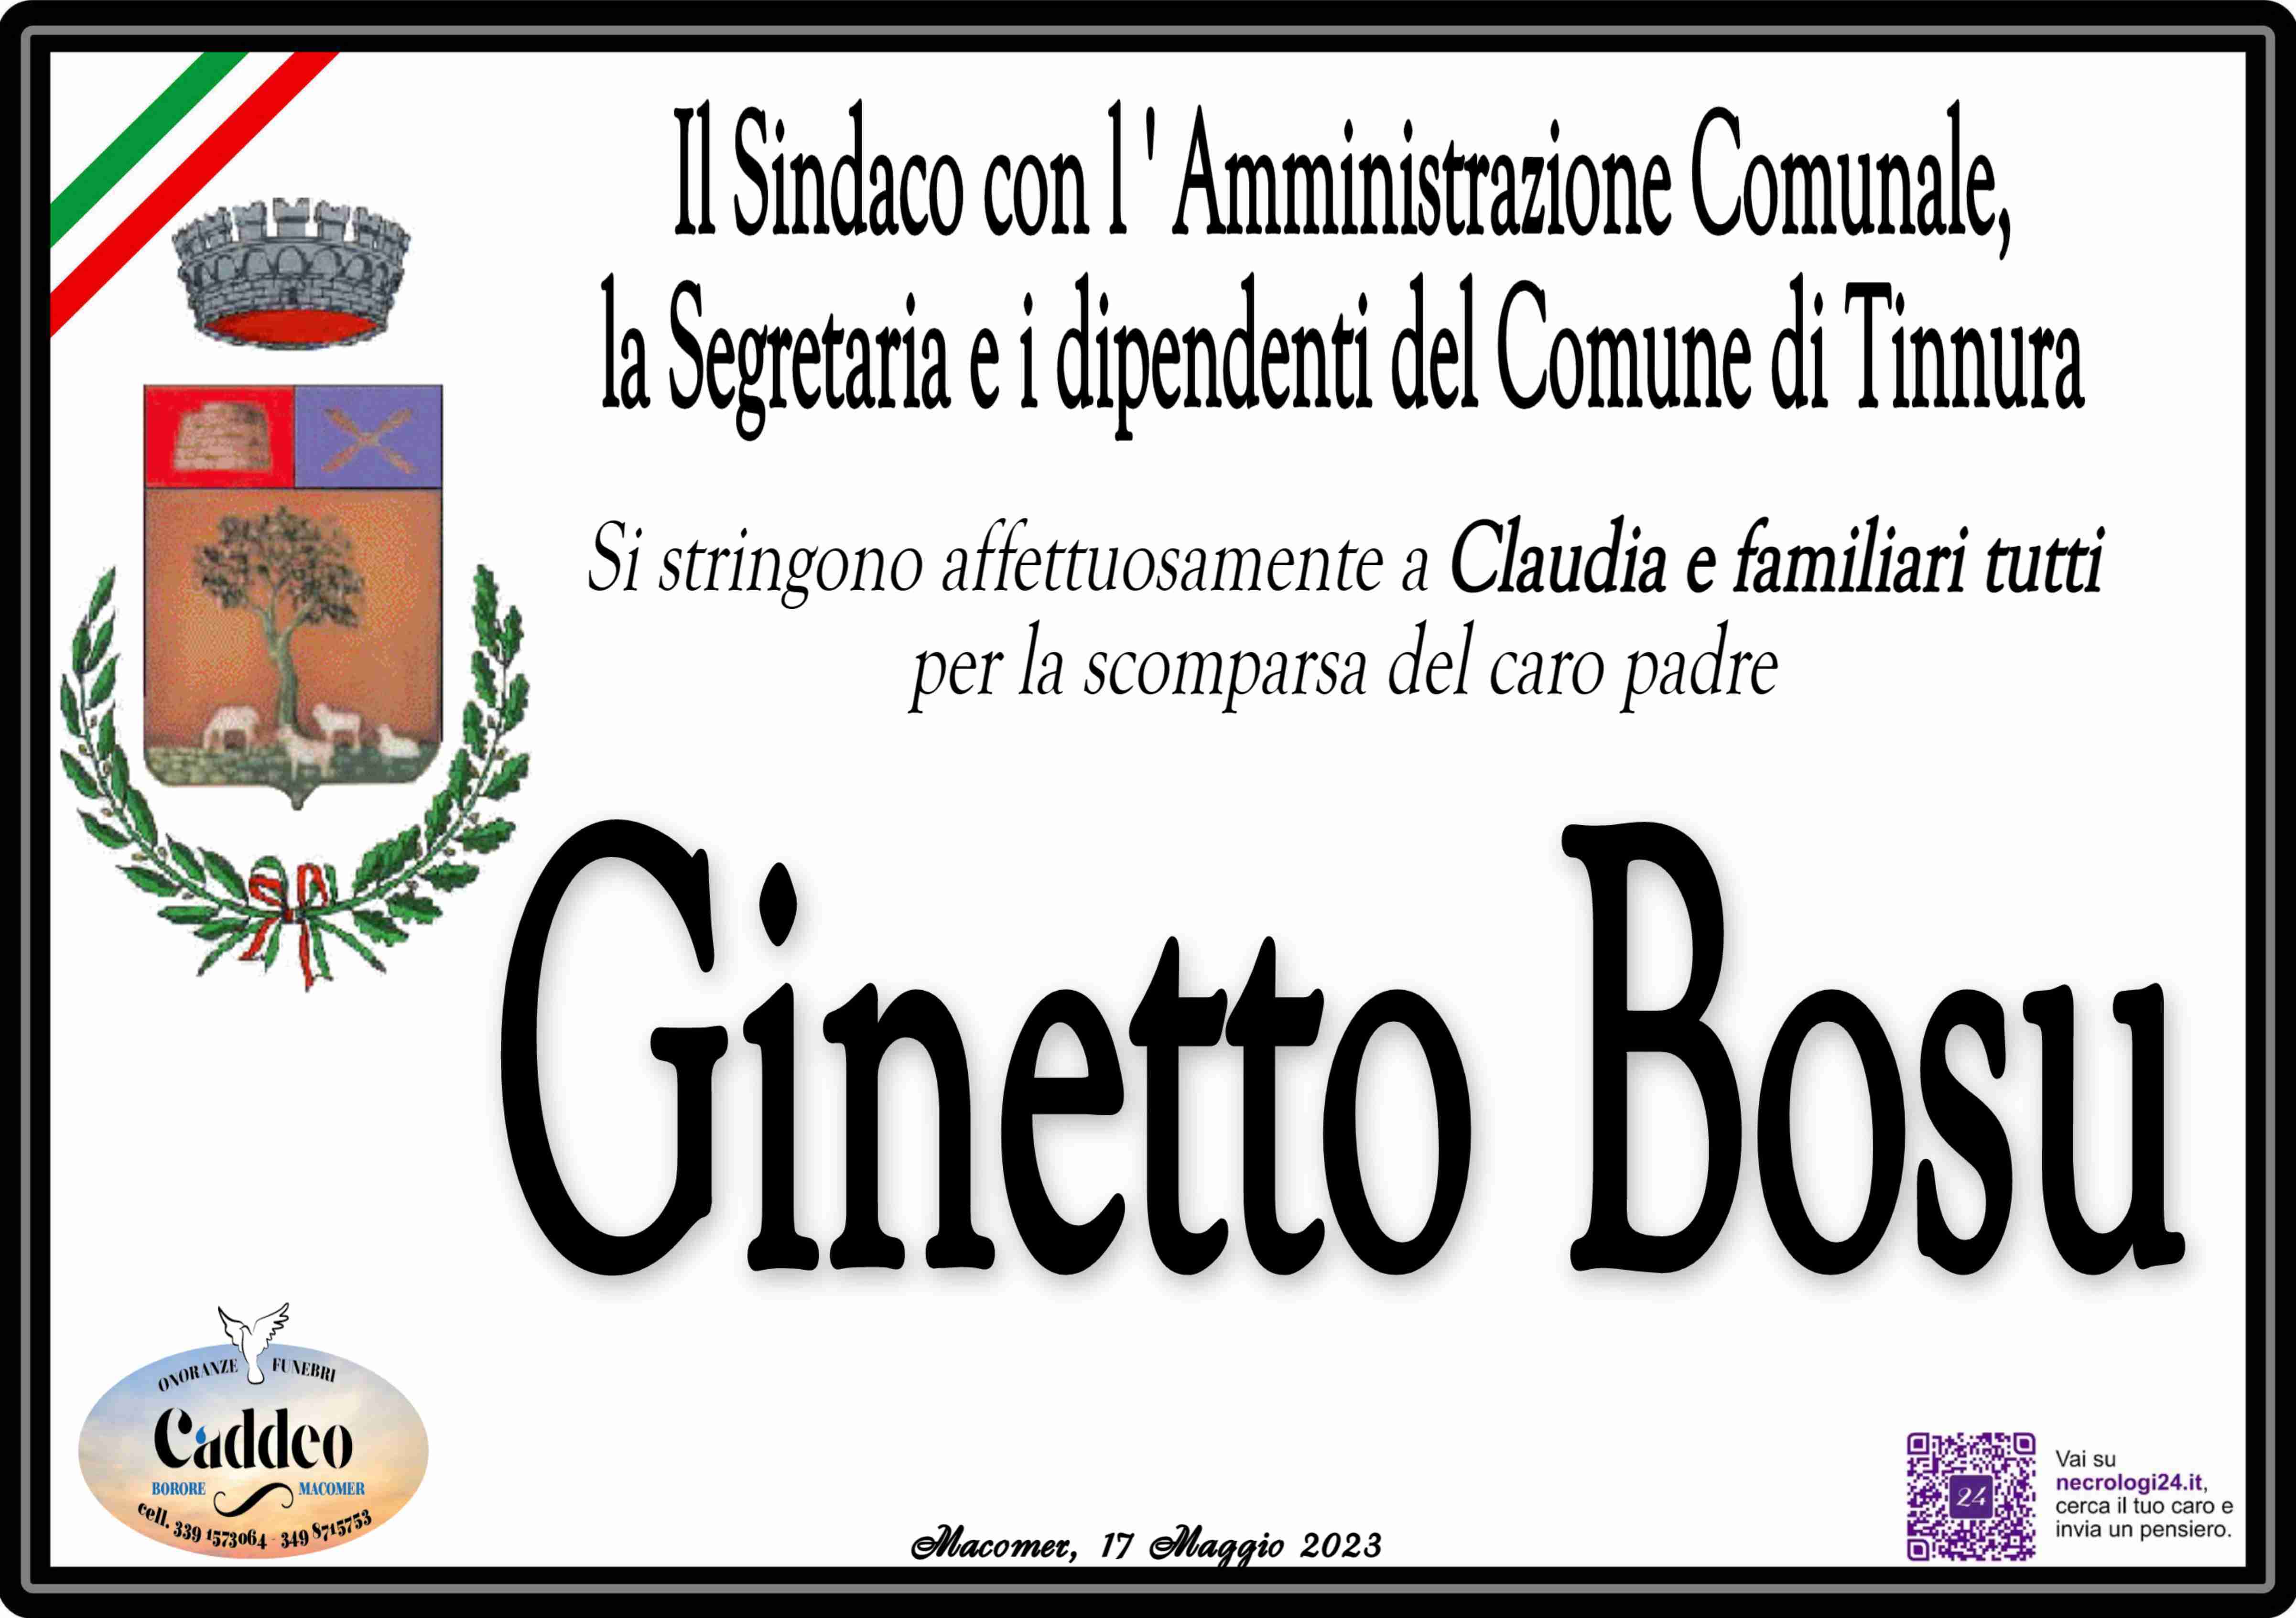 Ginetto Bosu